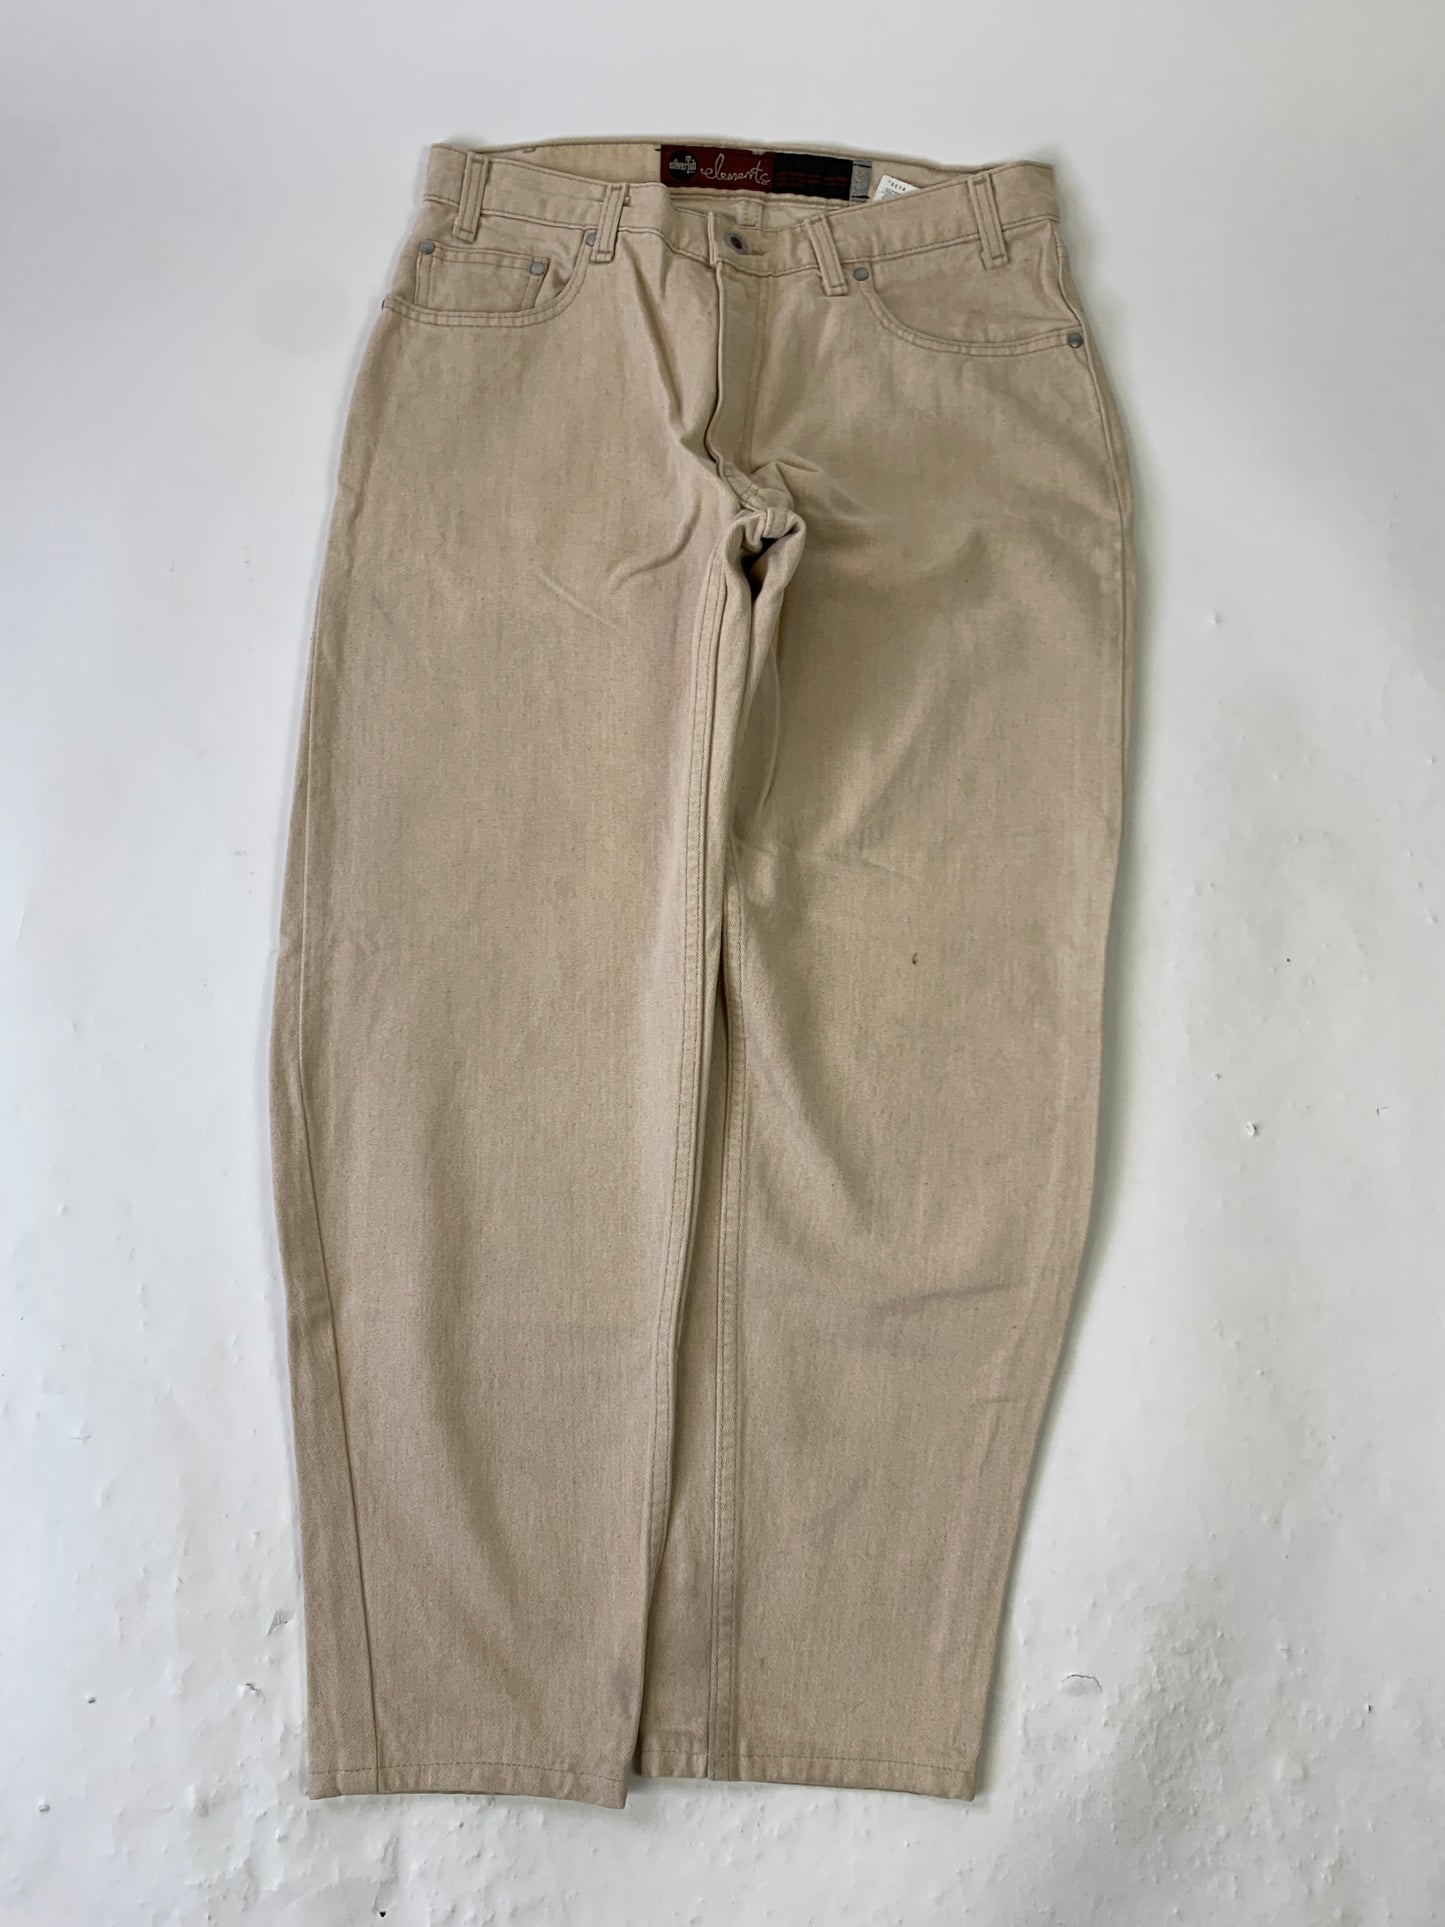 Levis Silvertab Vintage Jeans - 32